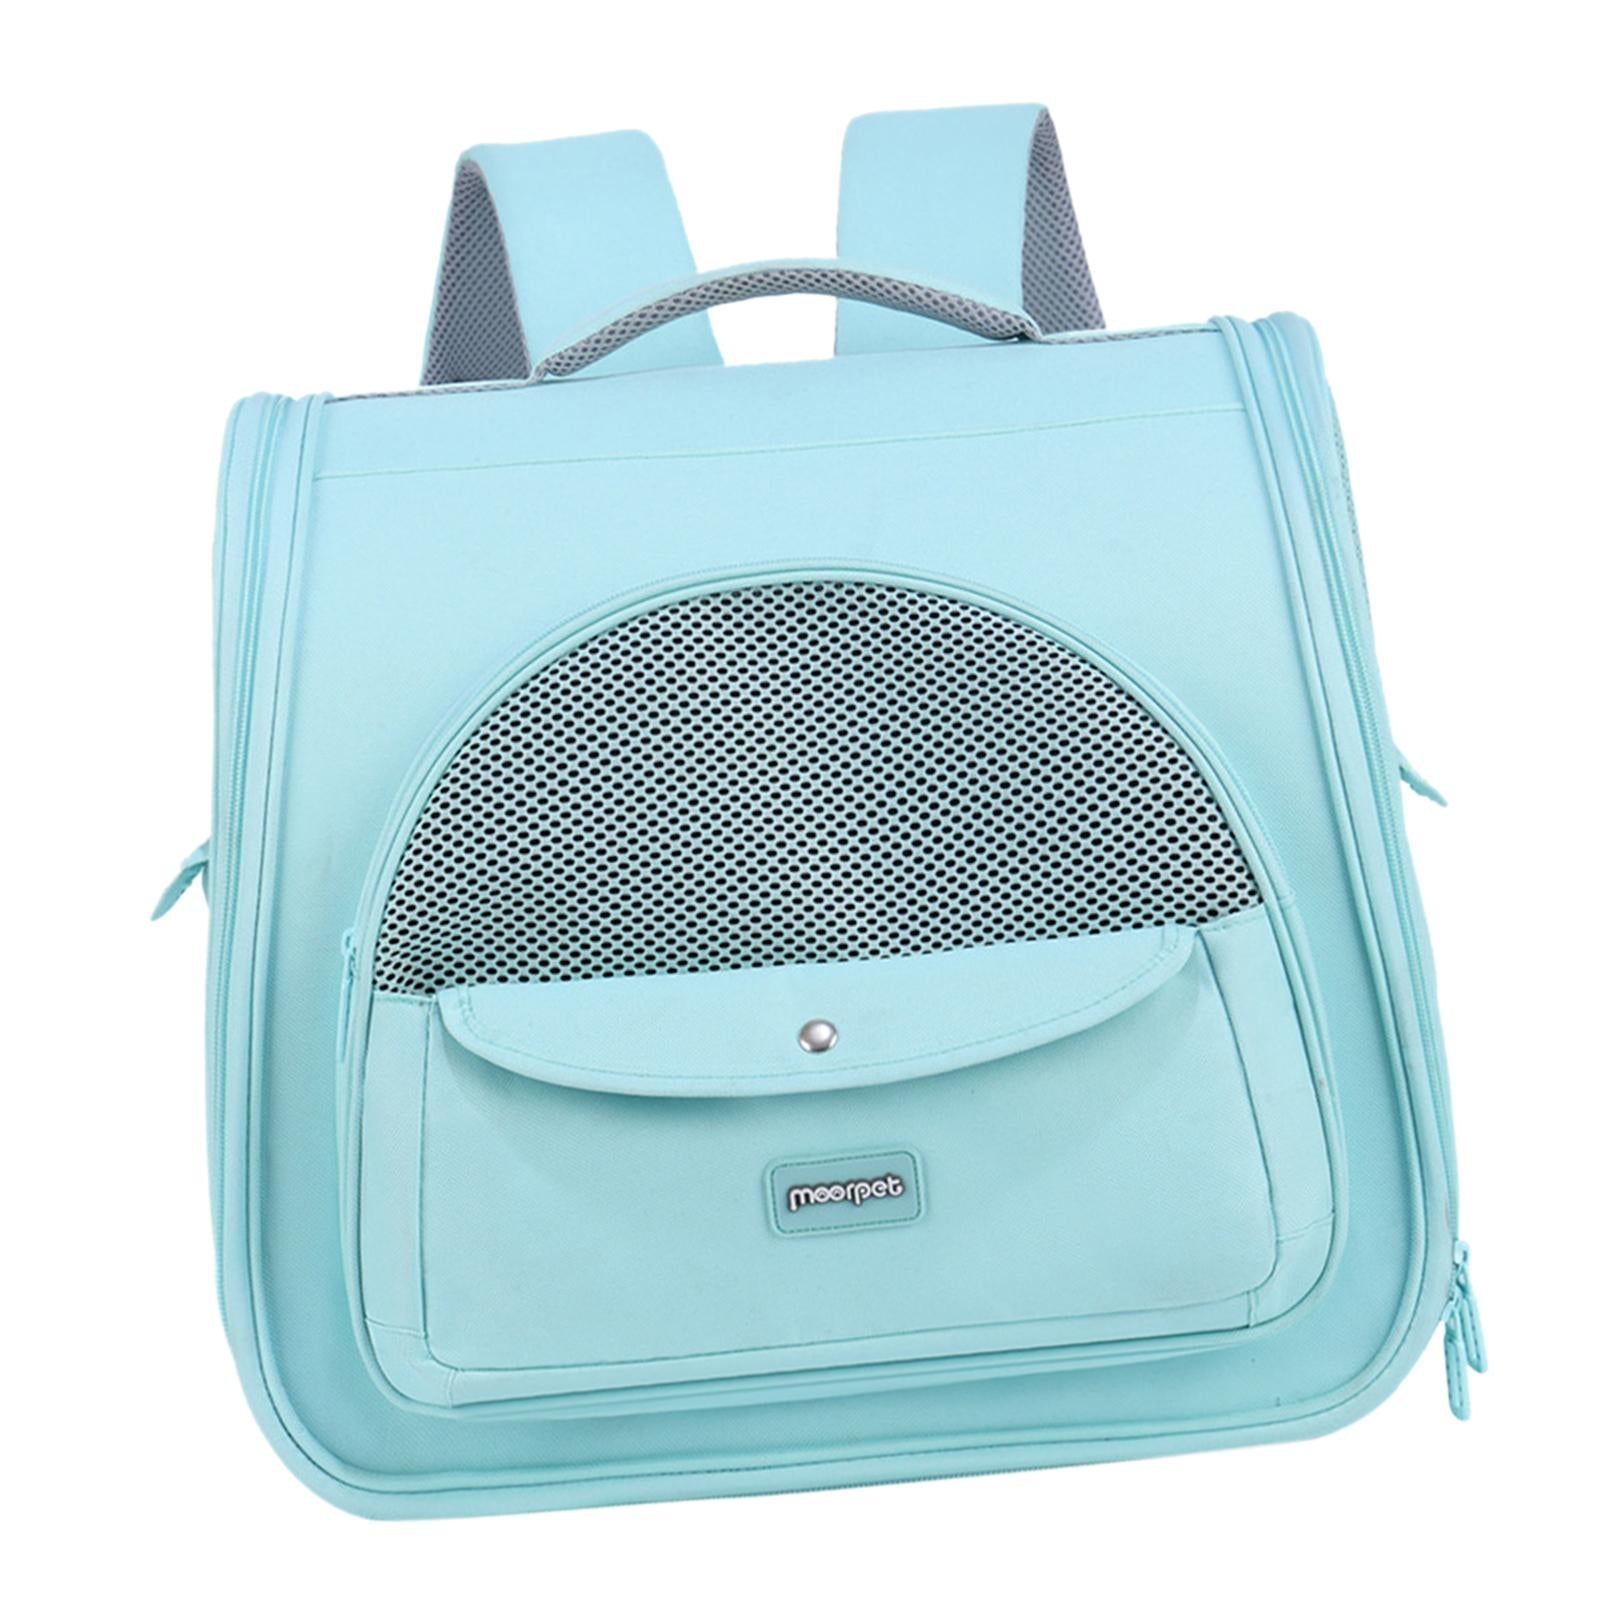 Pet Carrier Backpack Soft Handbag Travel Bag for Dogs Cats Hiking Rabbits Green